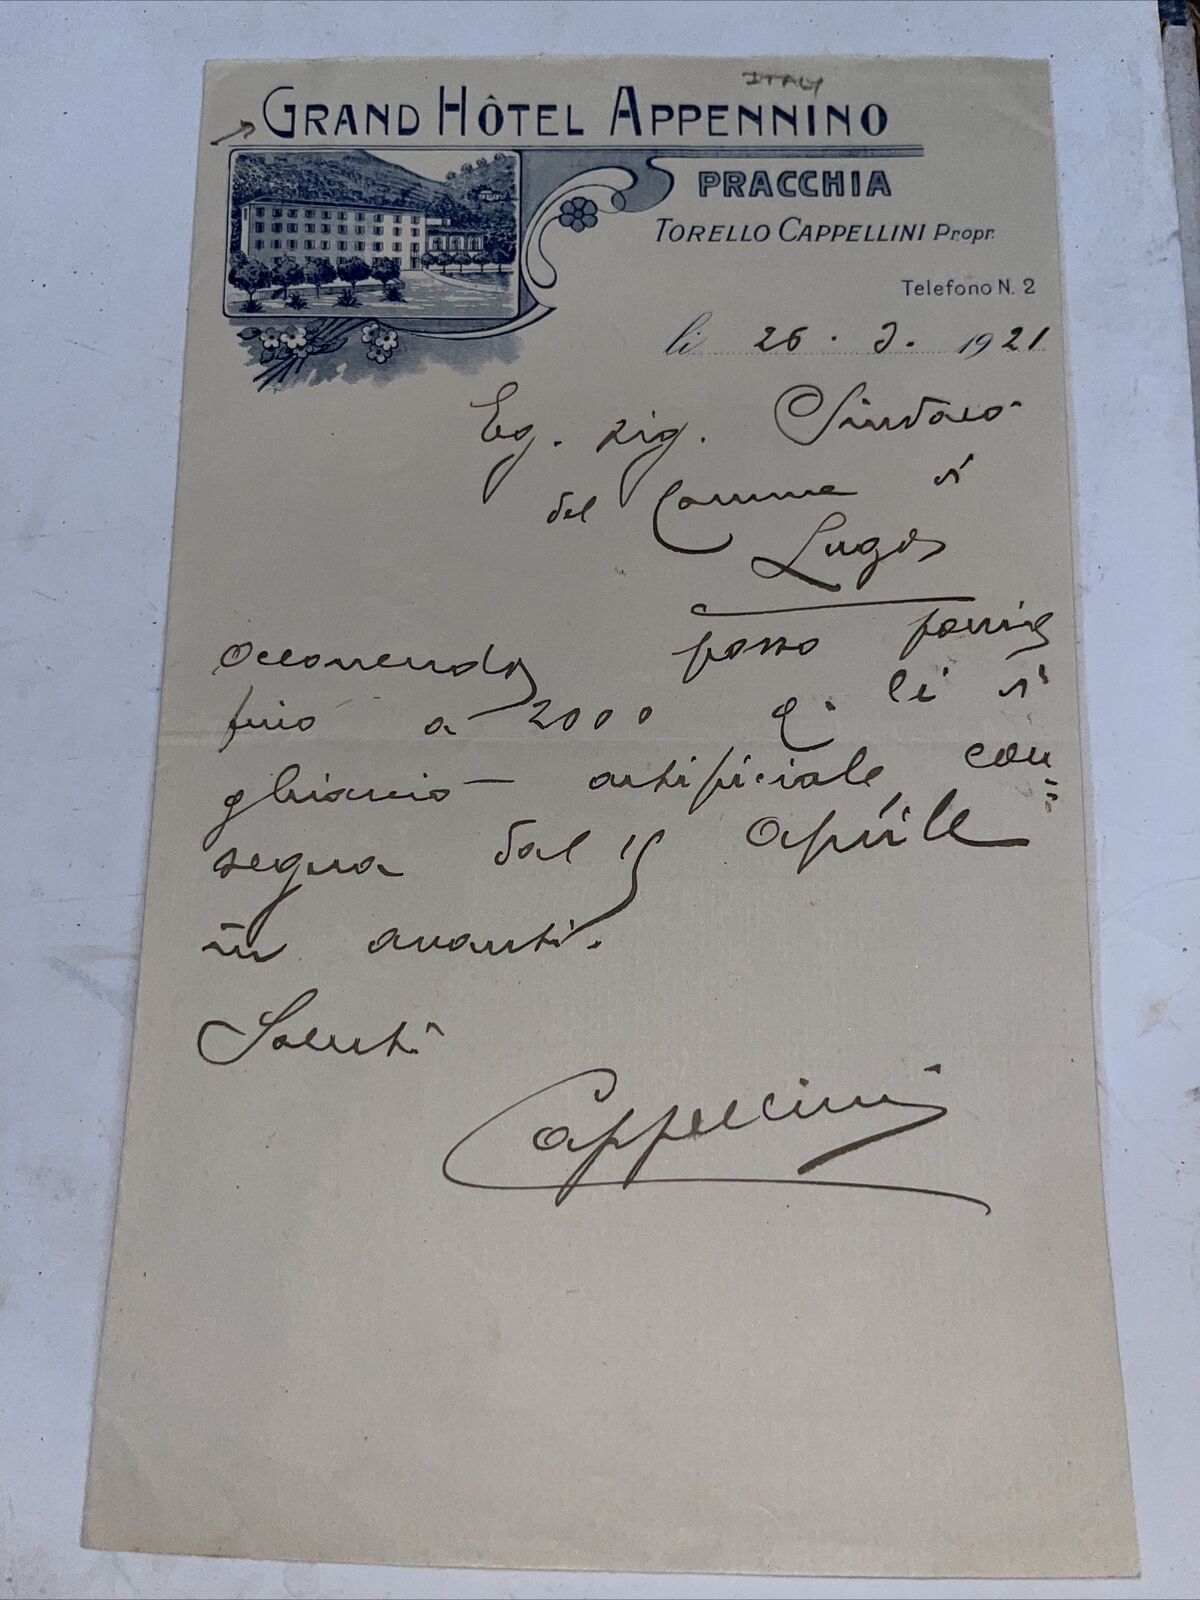 Antique 1921 Letter on Grand Hotel Appennino Letterhead - Pracchia Italy Italian